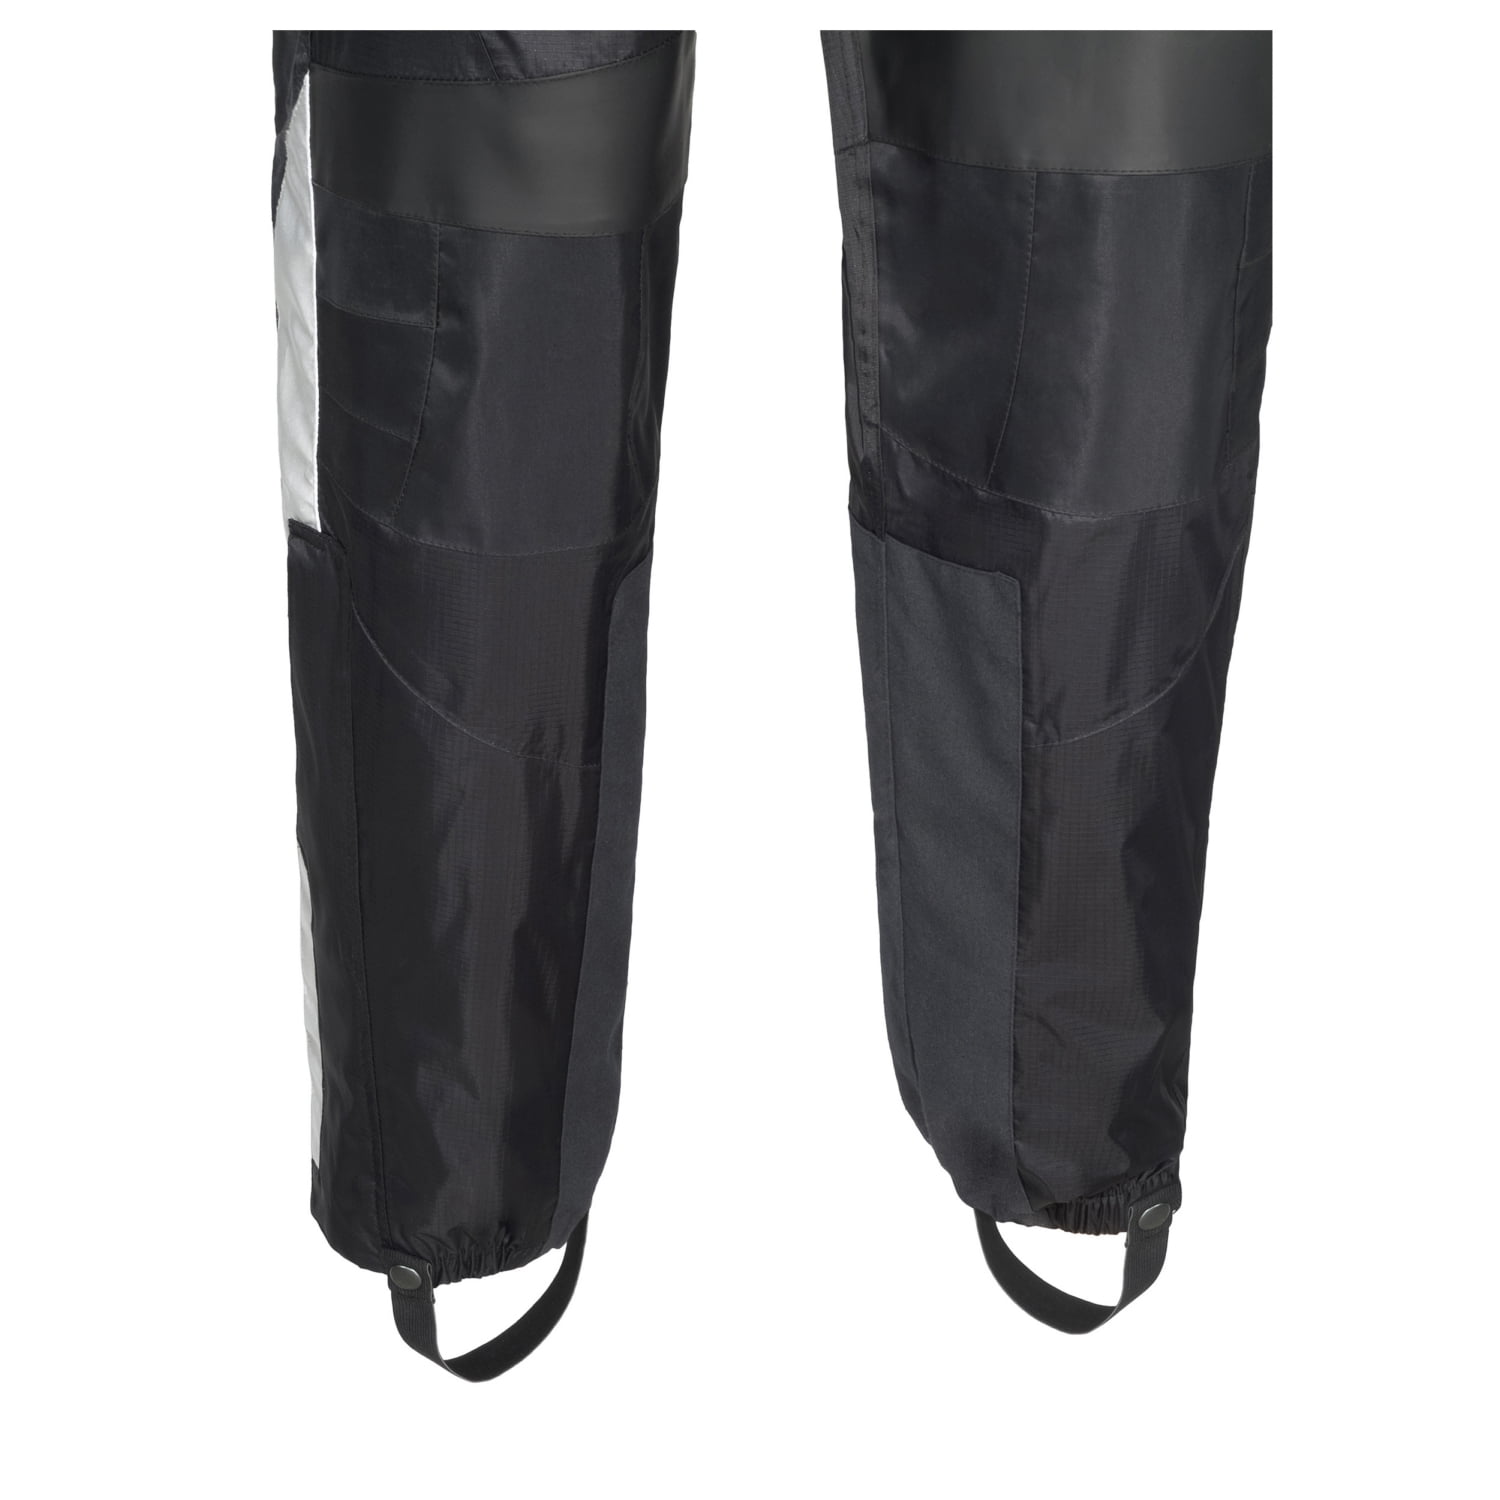 Tourmaster Sentinel 2.0 Rainsuit Pants Small, Black w/ Nomex 